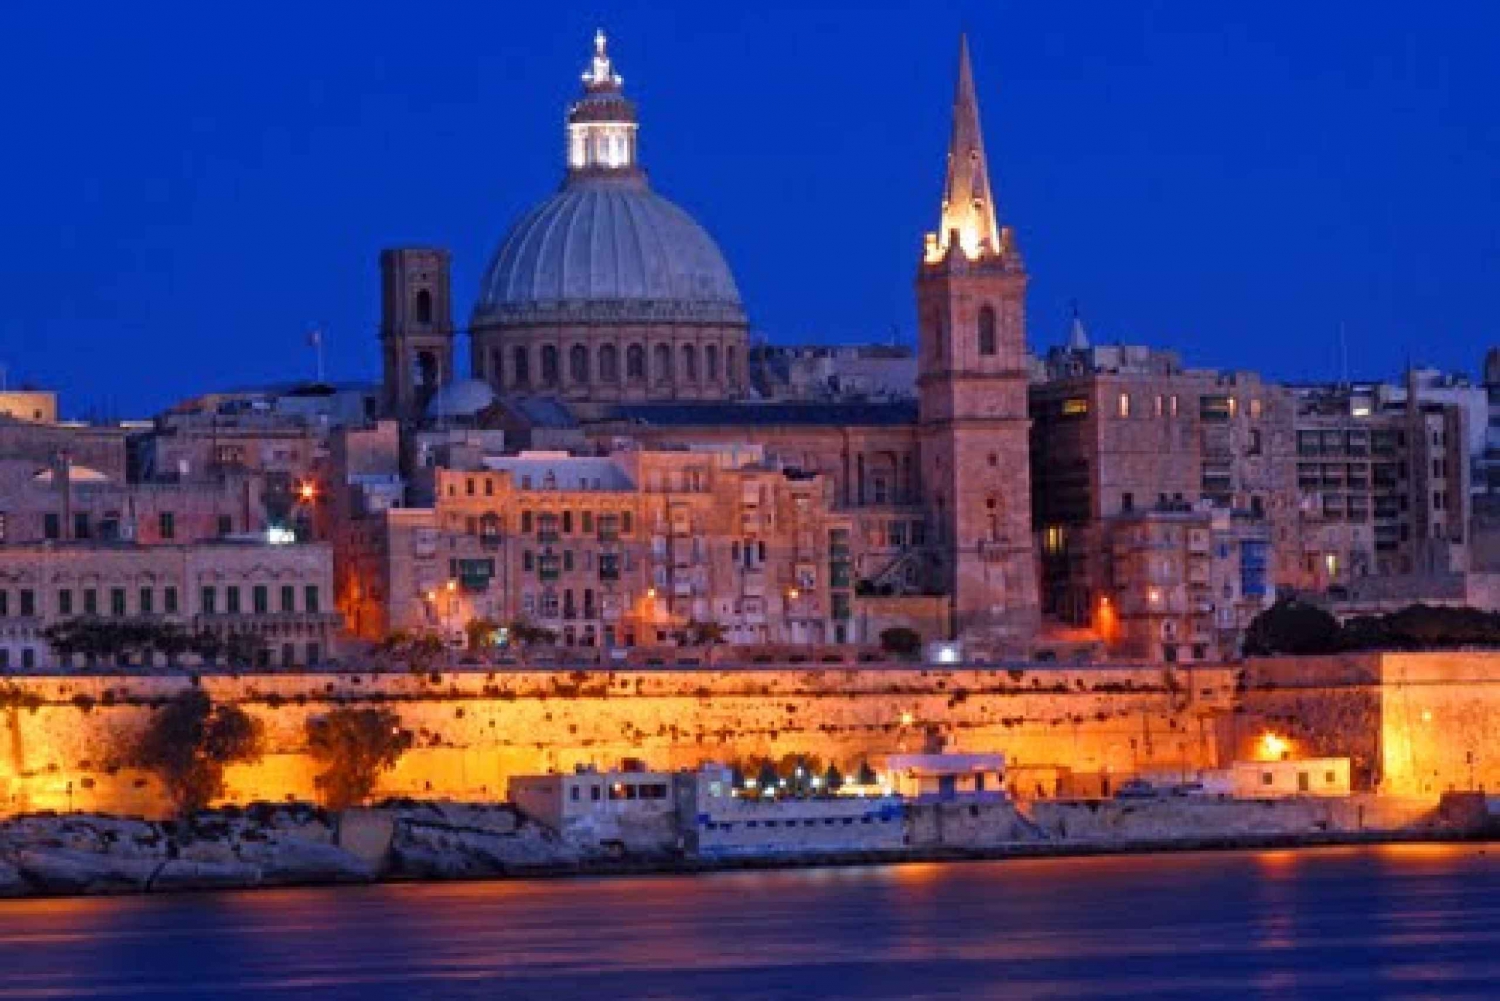 Malta: Marsamxett Harbour and Grand Harbour Cruise by Night